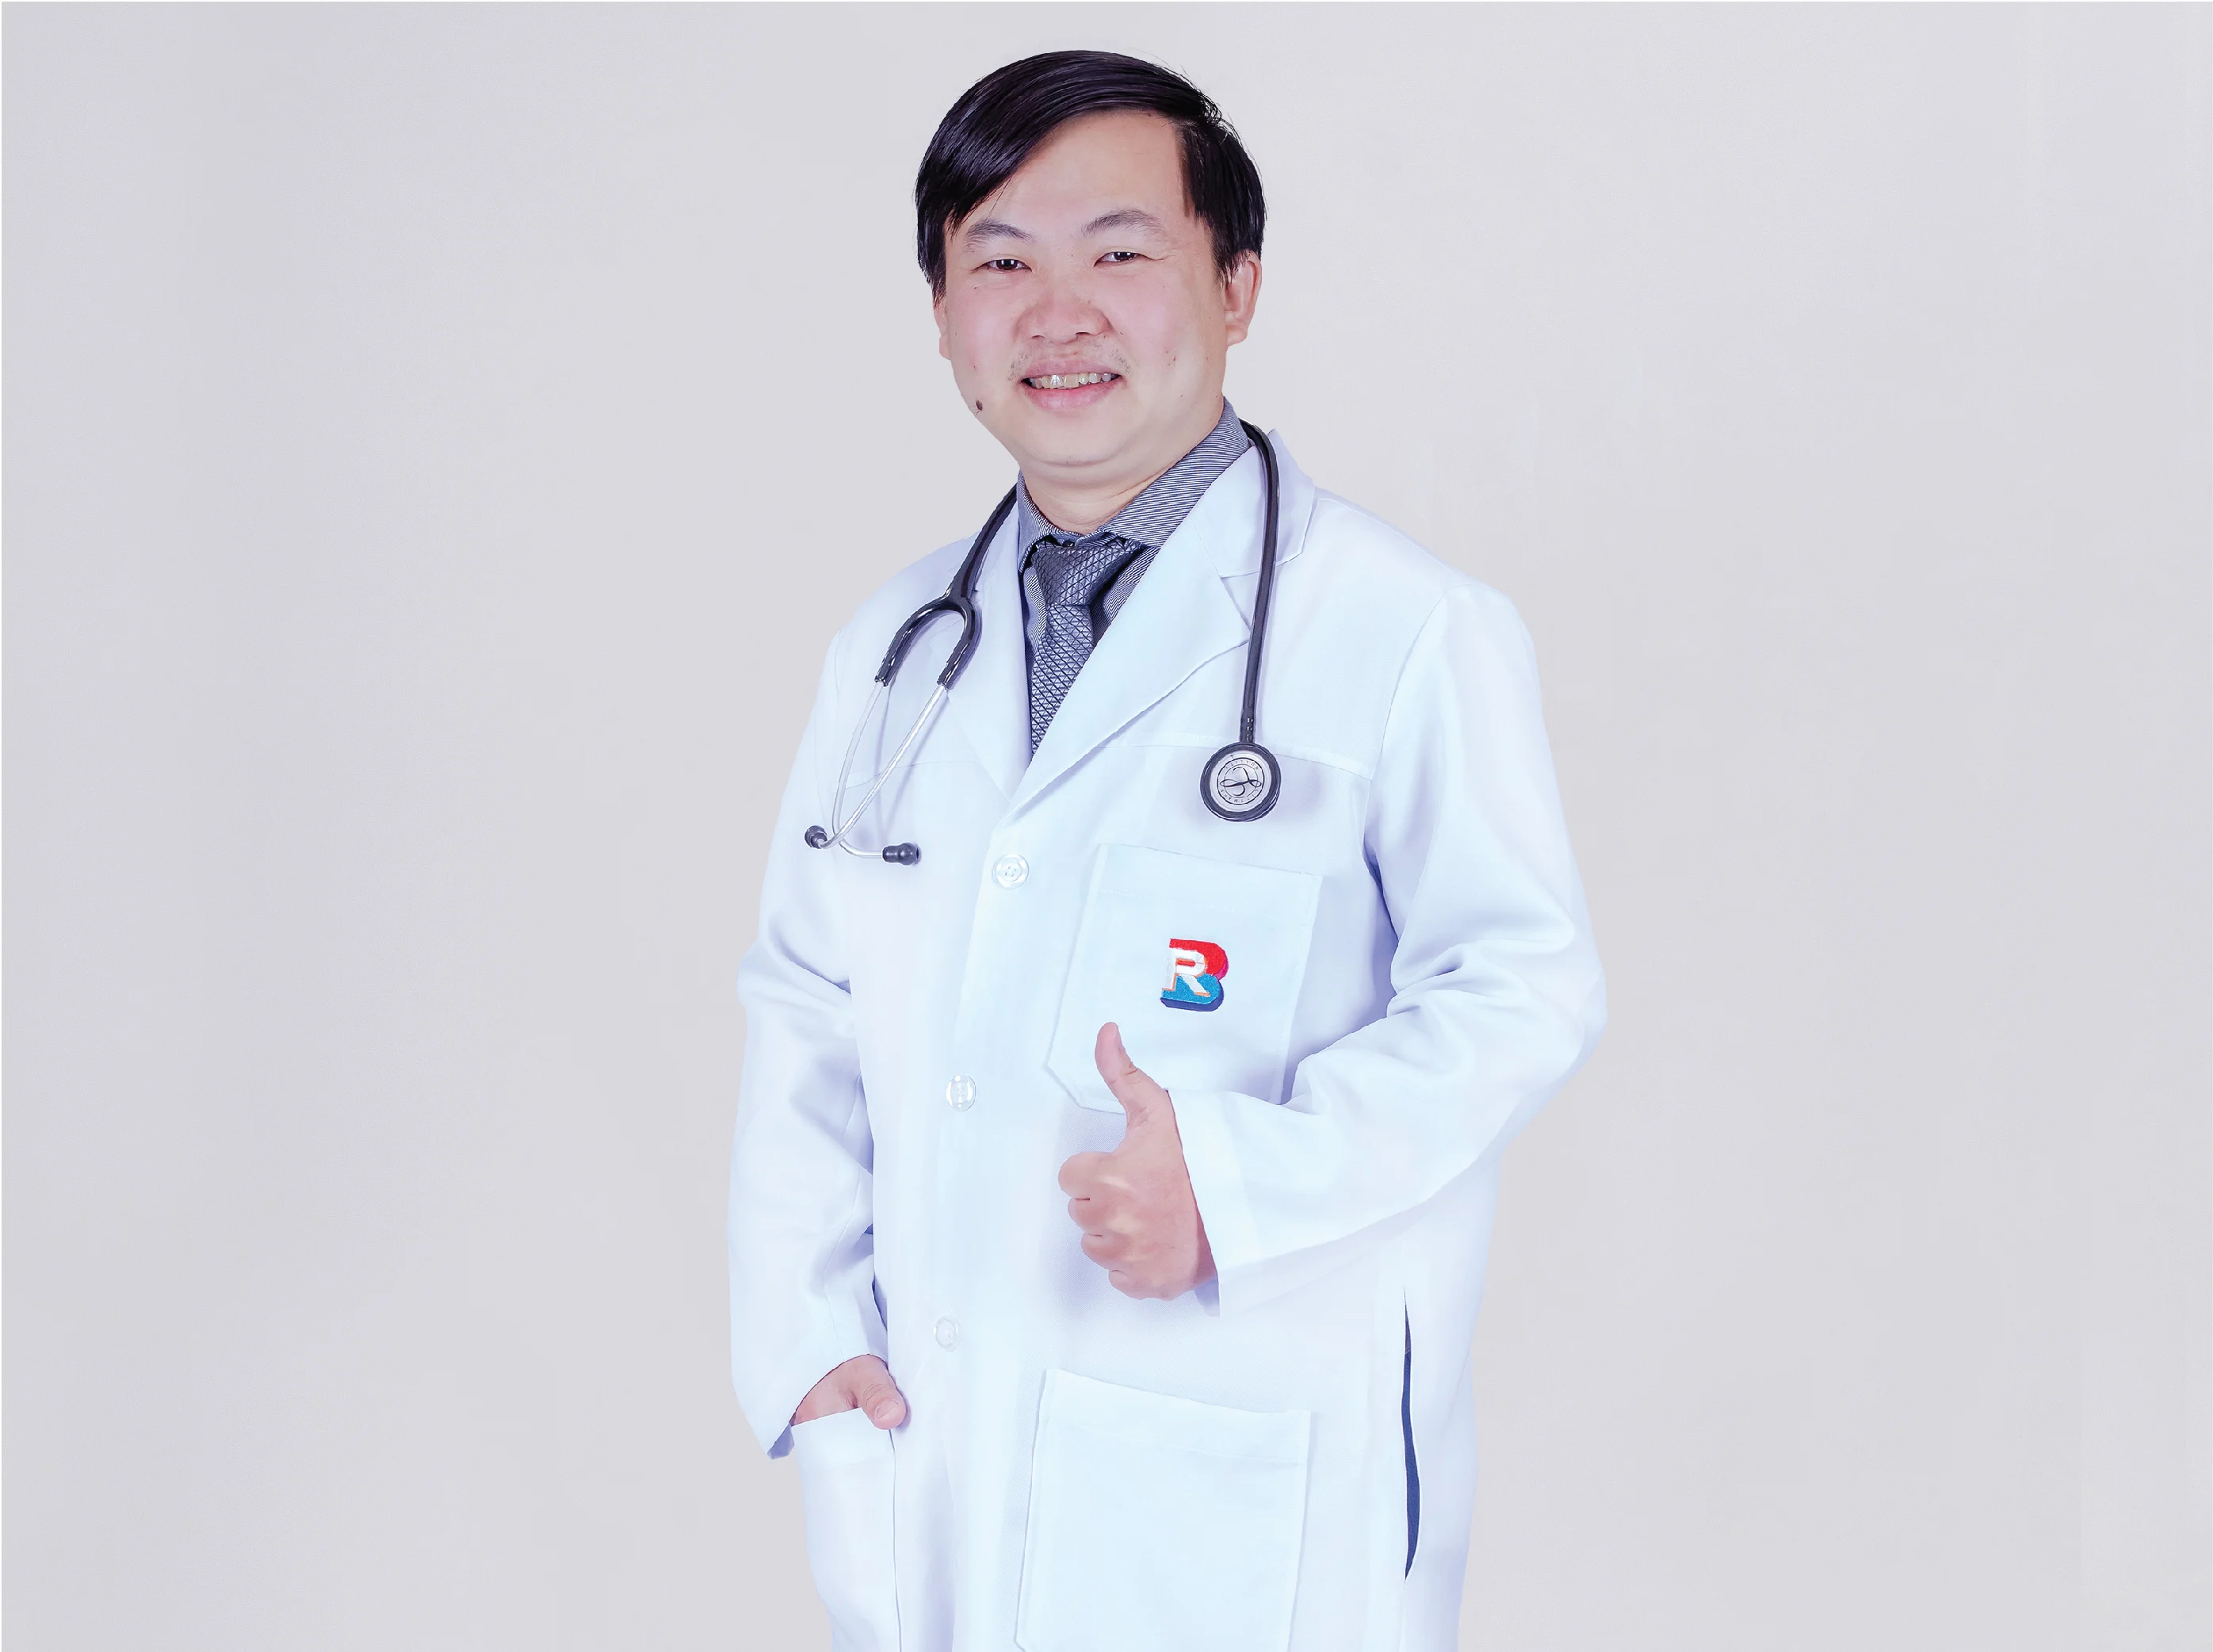 Dr. Heng Ratmony